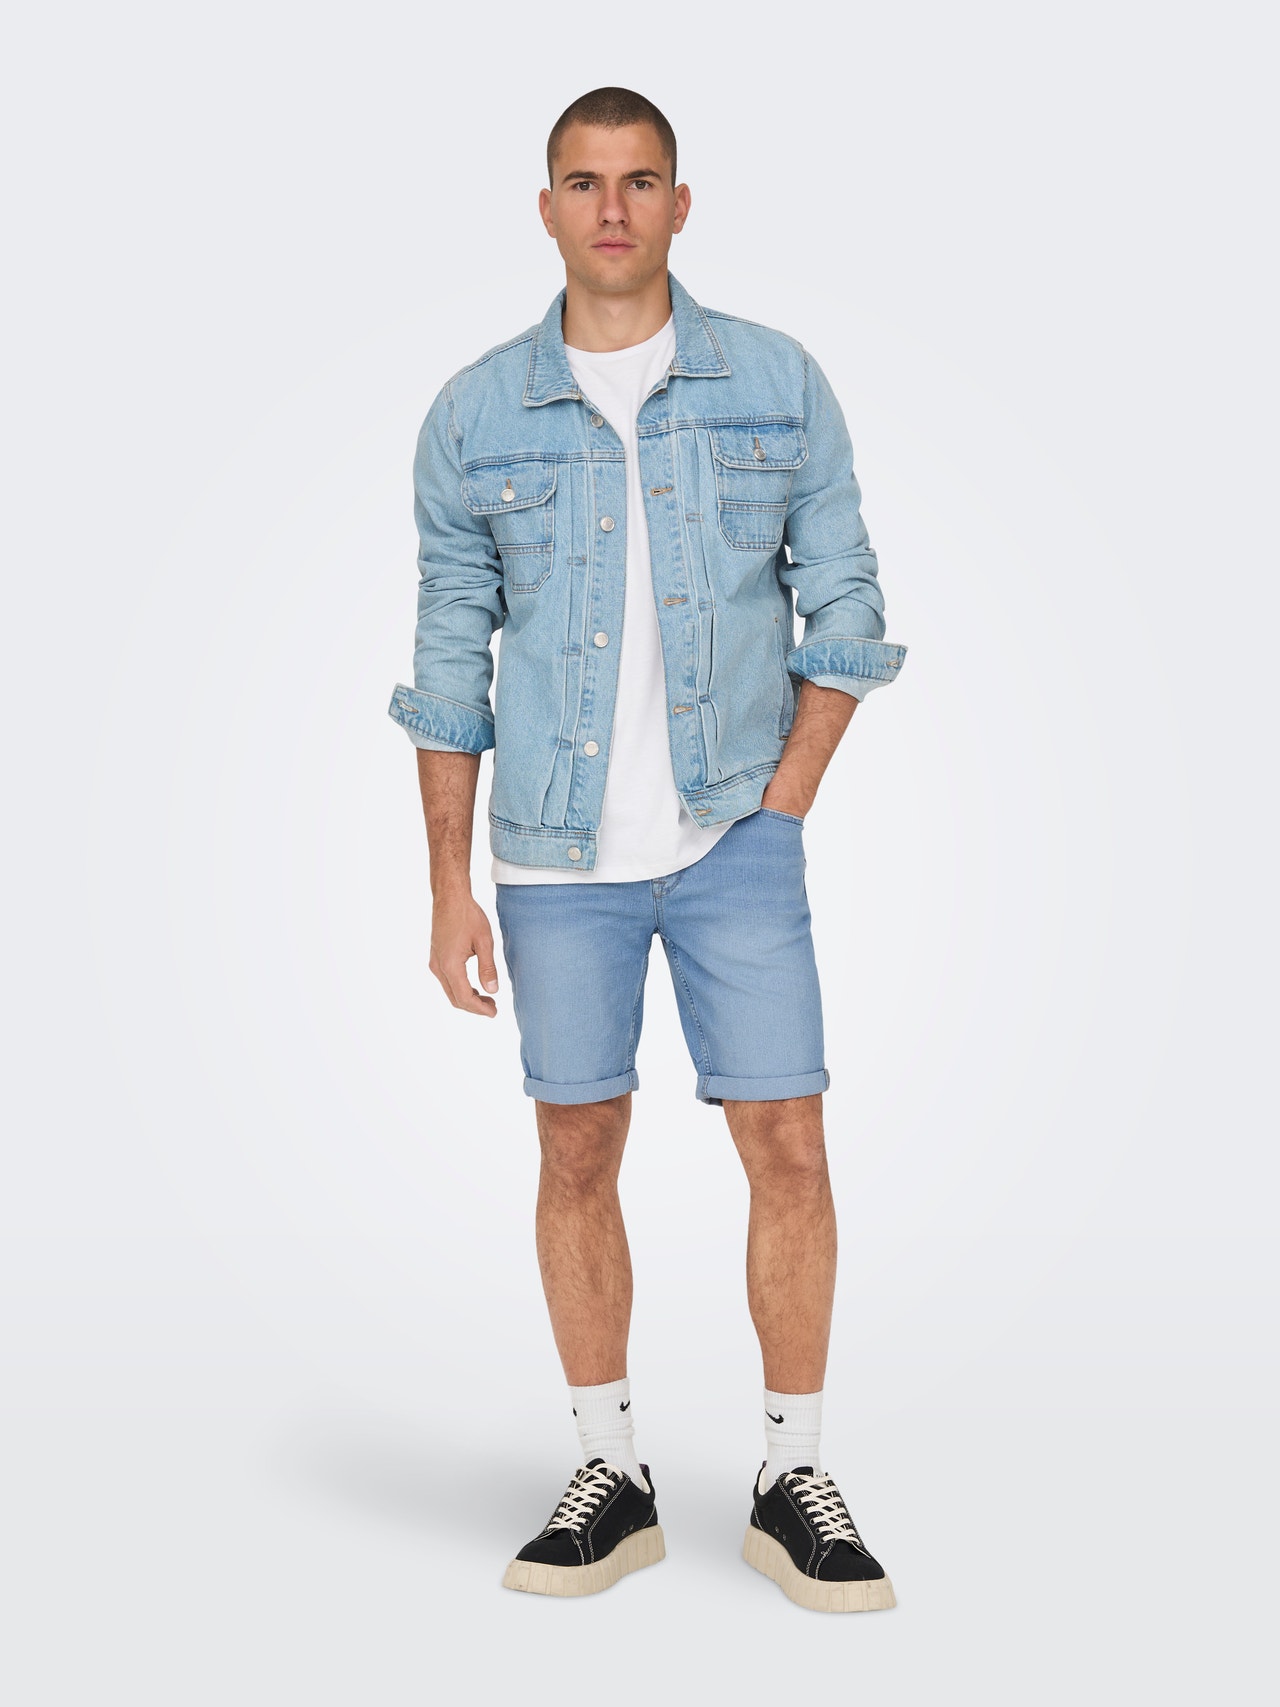 ONLY & SONS Regular Fit Shorts -Light Blue Denim - 22024330